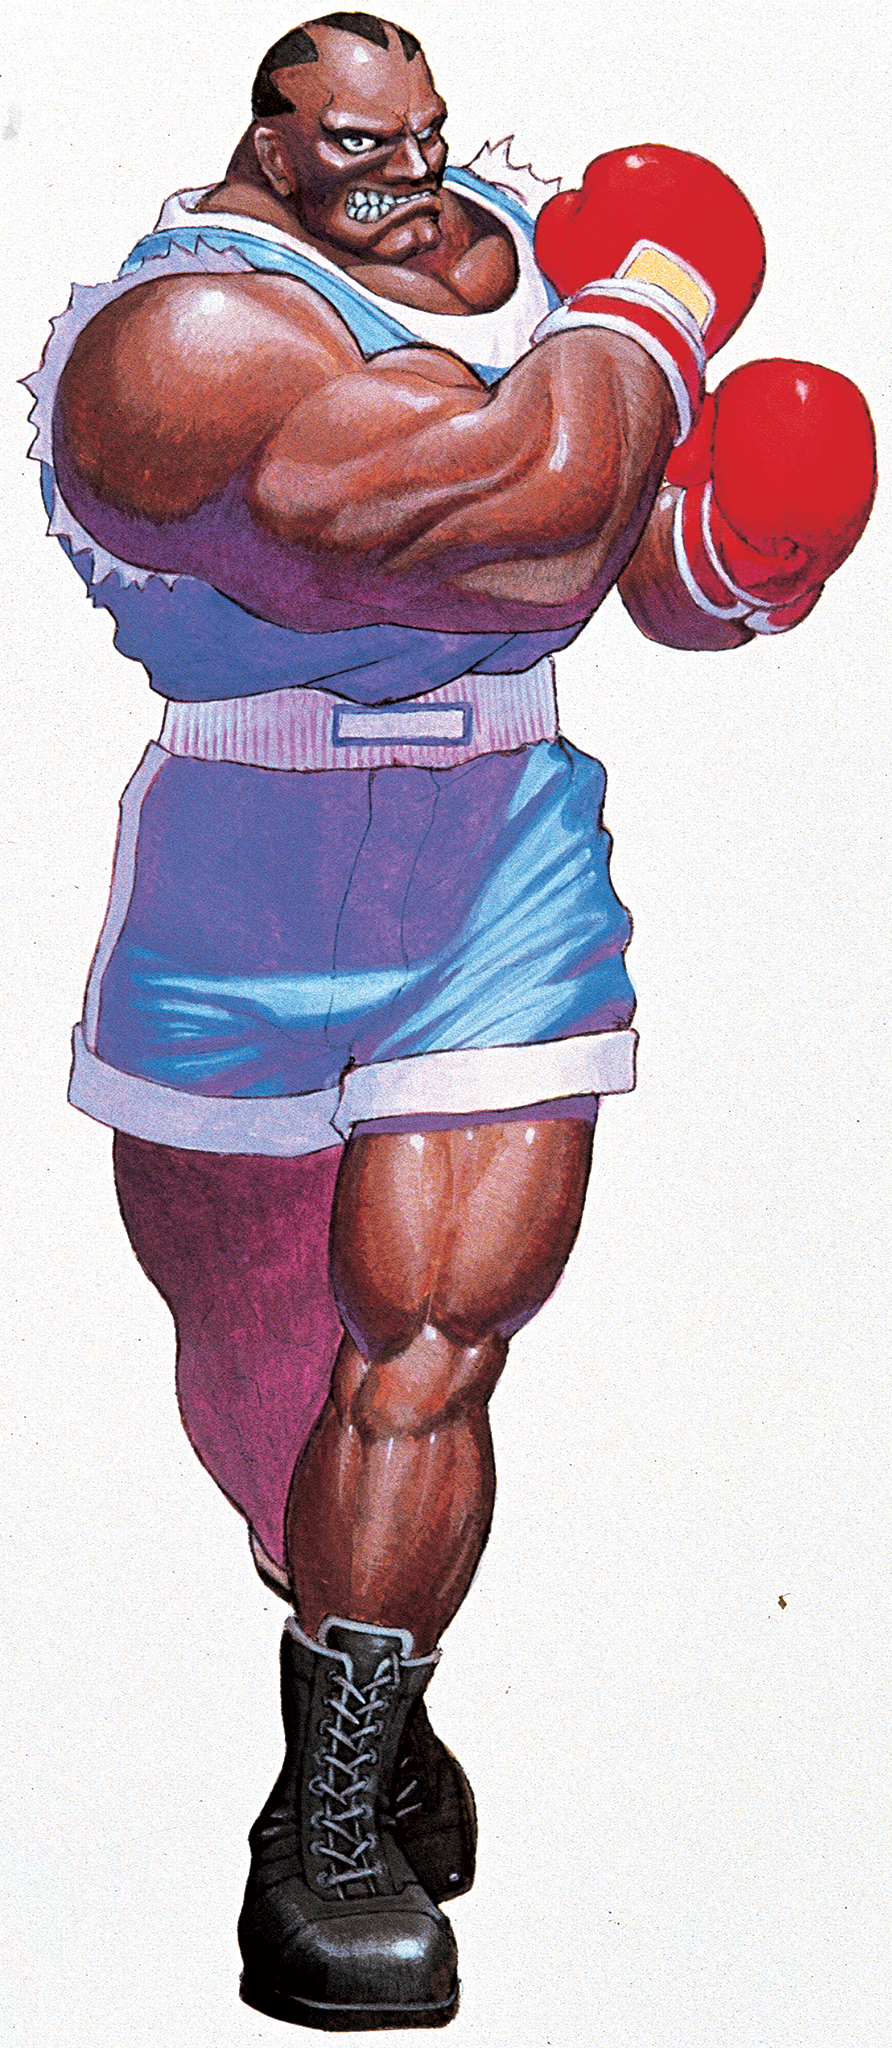 Street Fighter 2 Chara-full World Figure Vega Bison Sagat Barlog